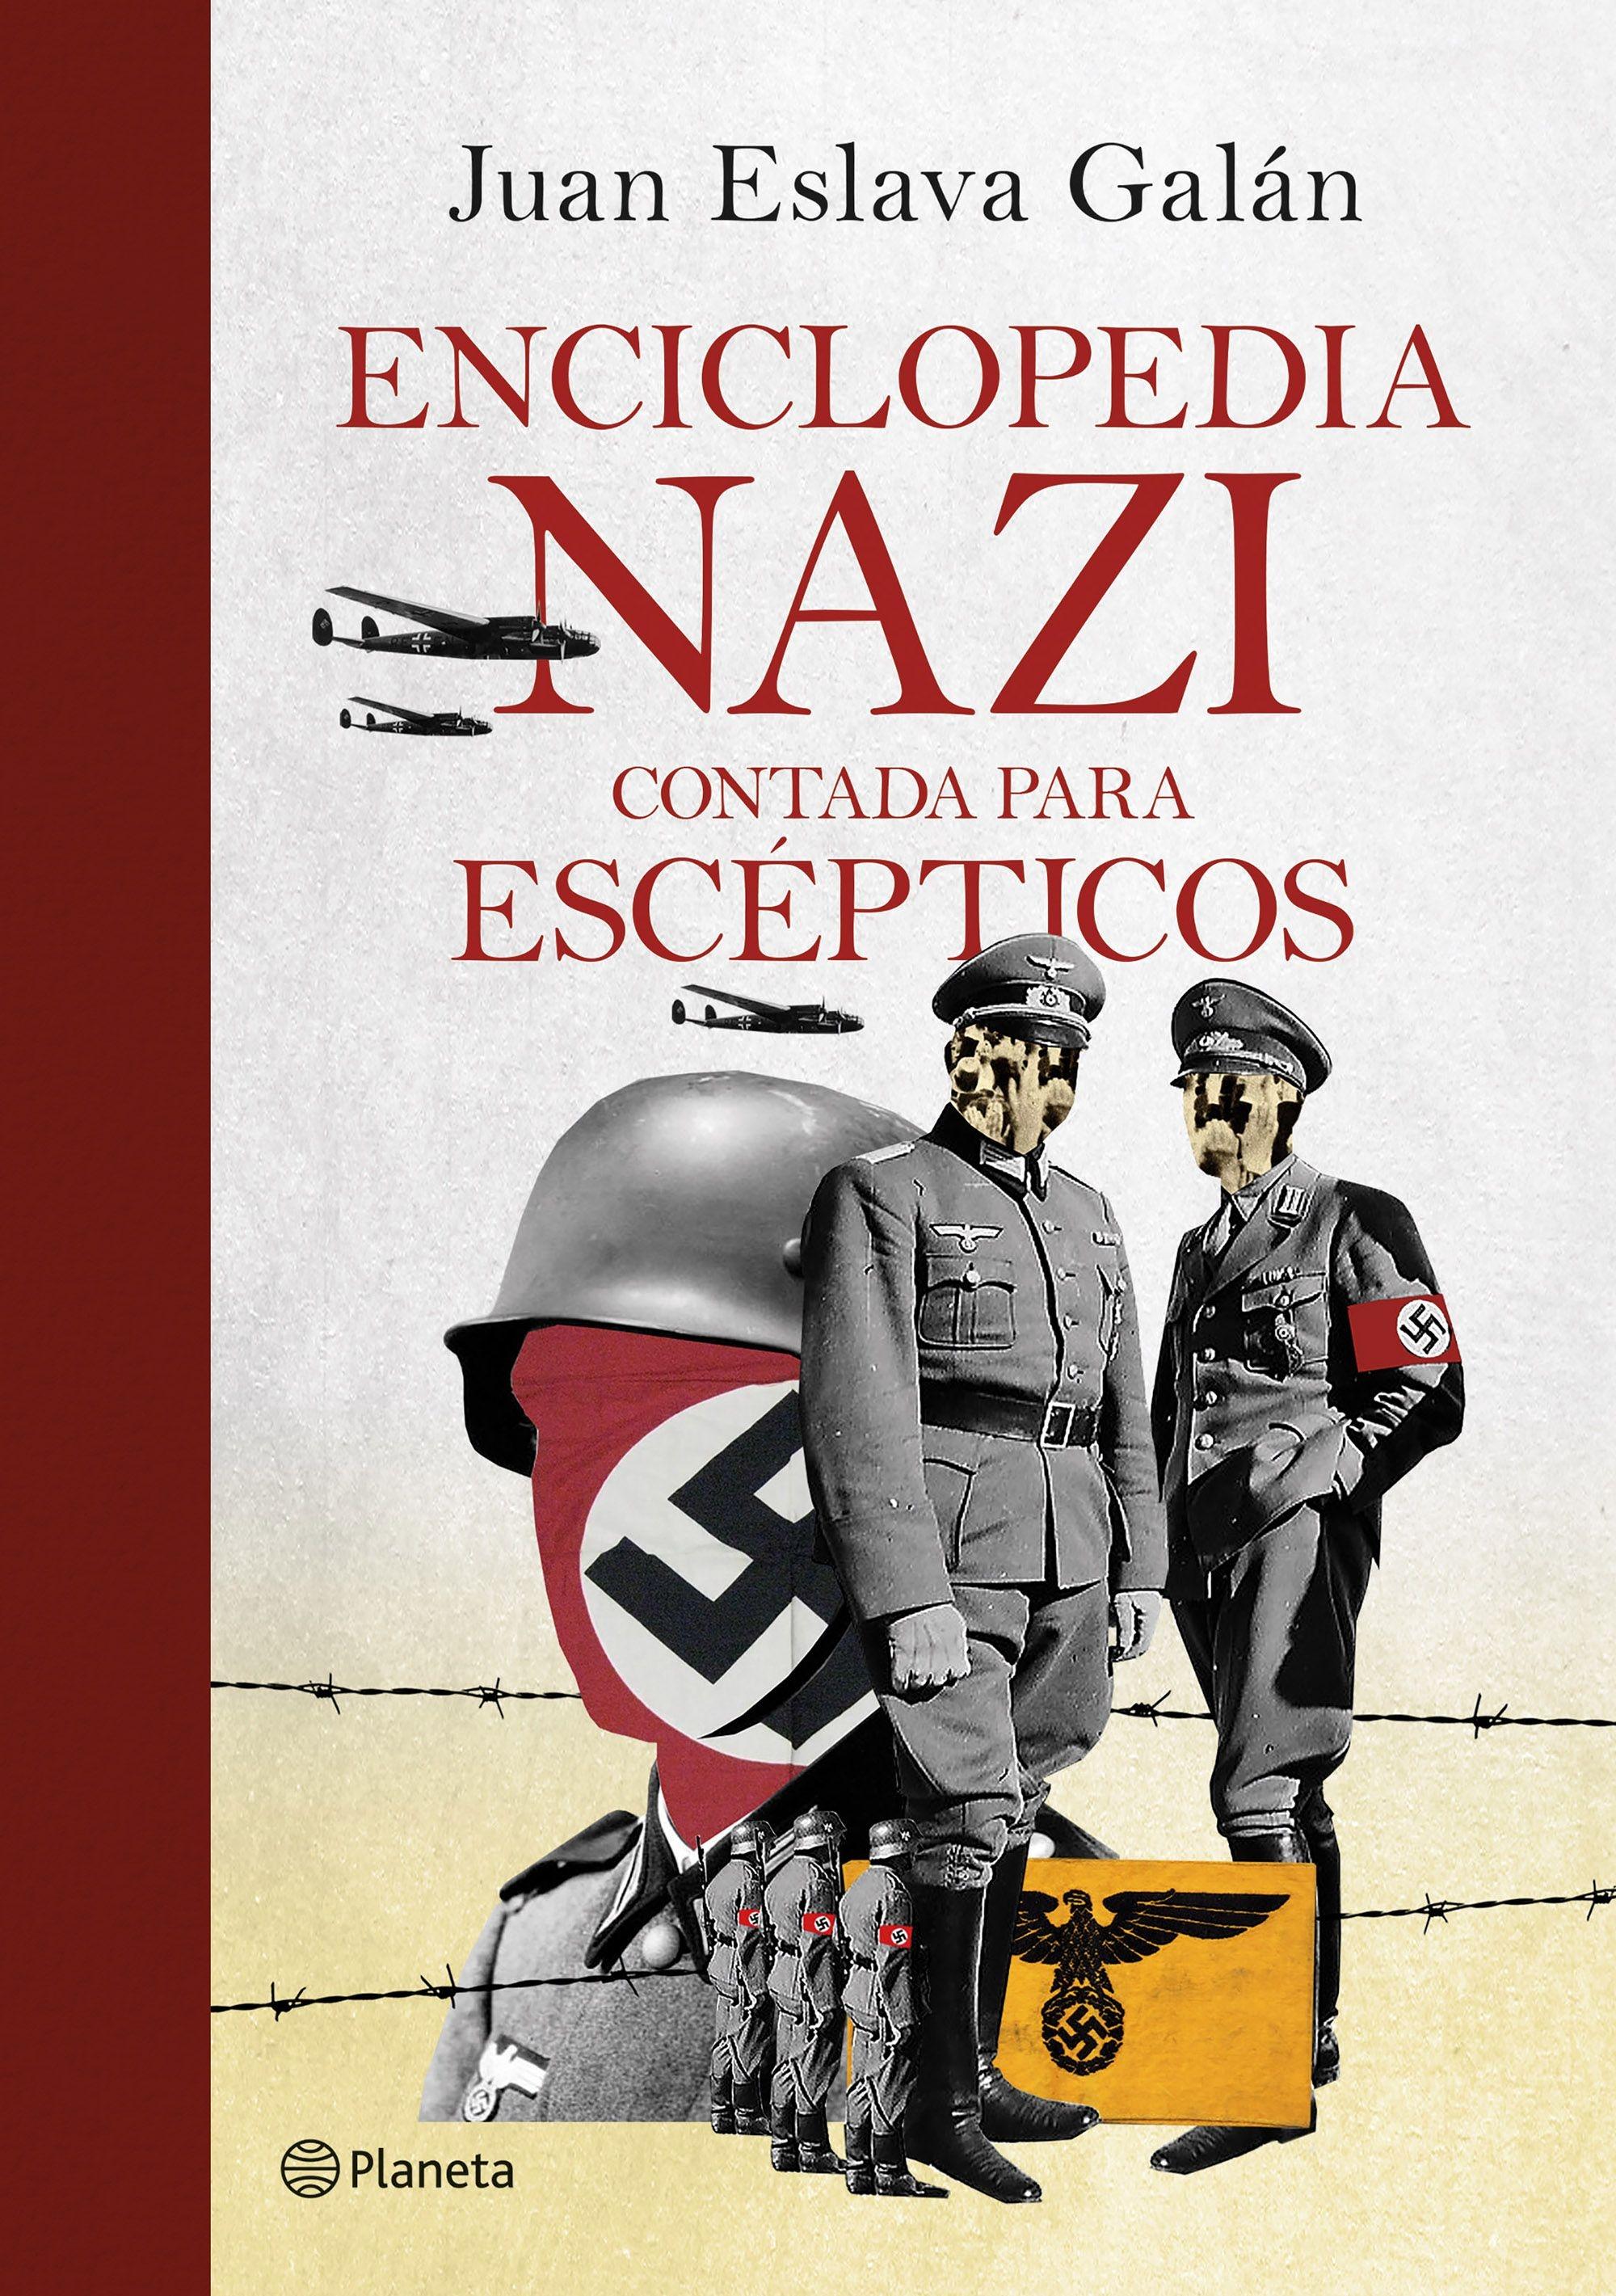 Enciclopedia Nazi "Contada para Escépticos". 